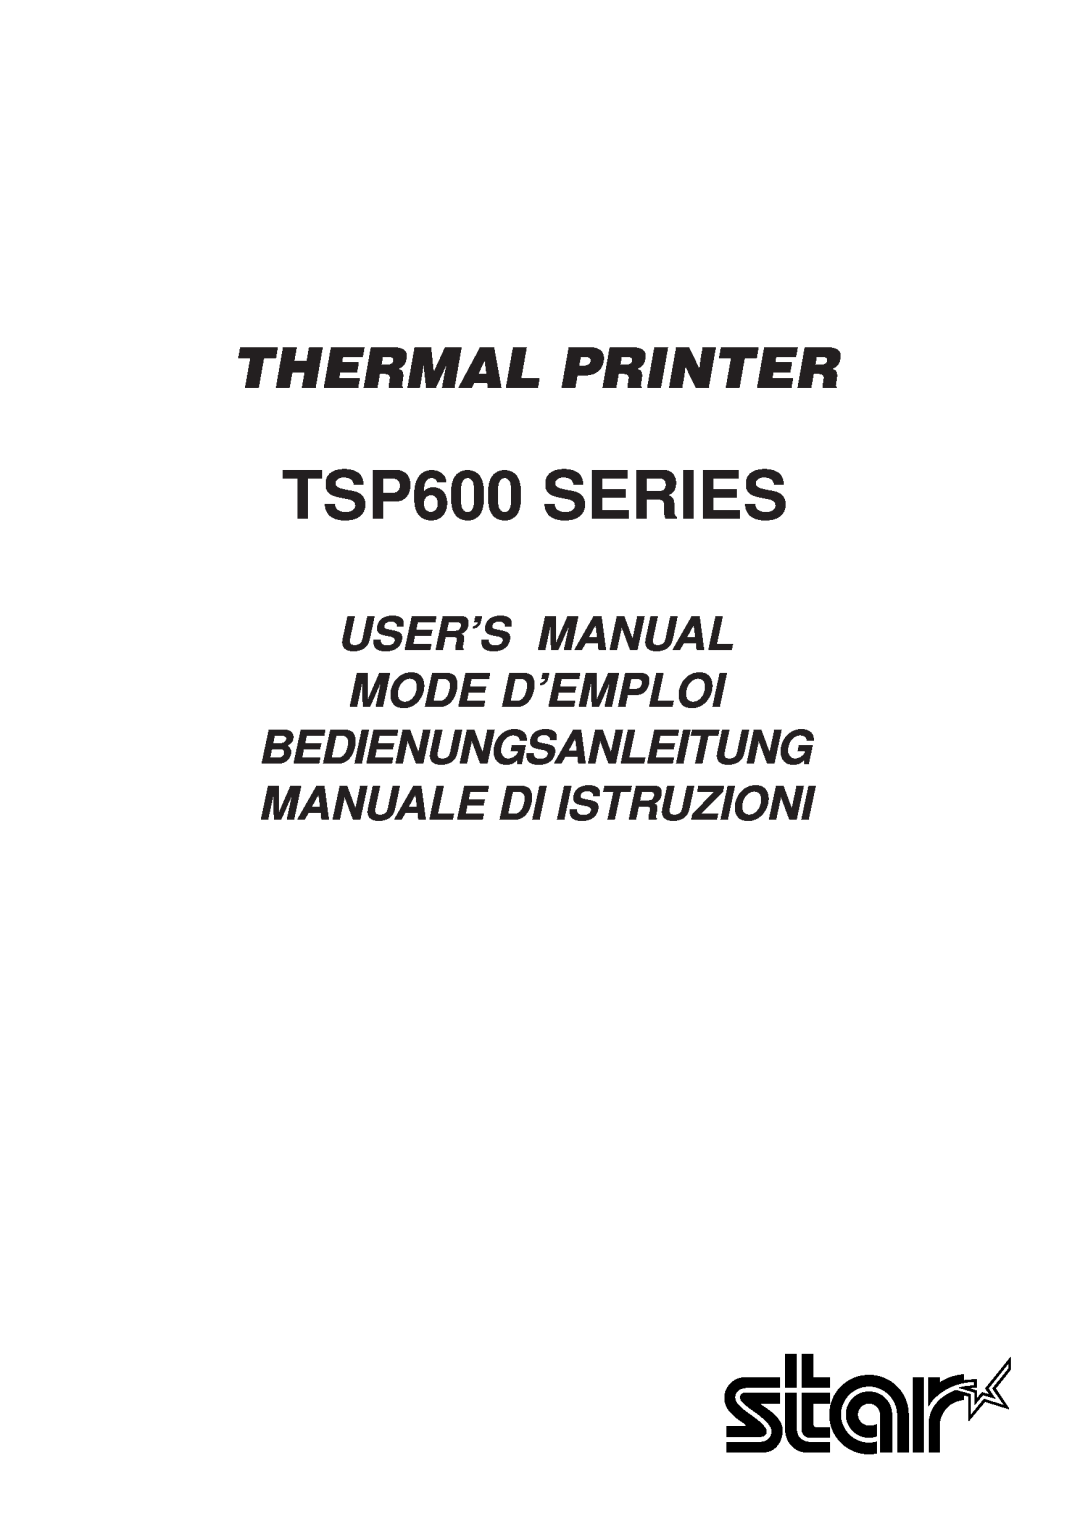 Star Micronics user manual TSP600 SERIES, Thermal Printer, User’S Manual Mode D’Emploi 